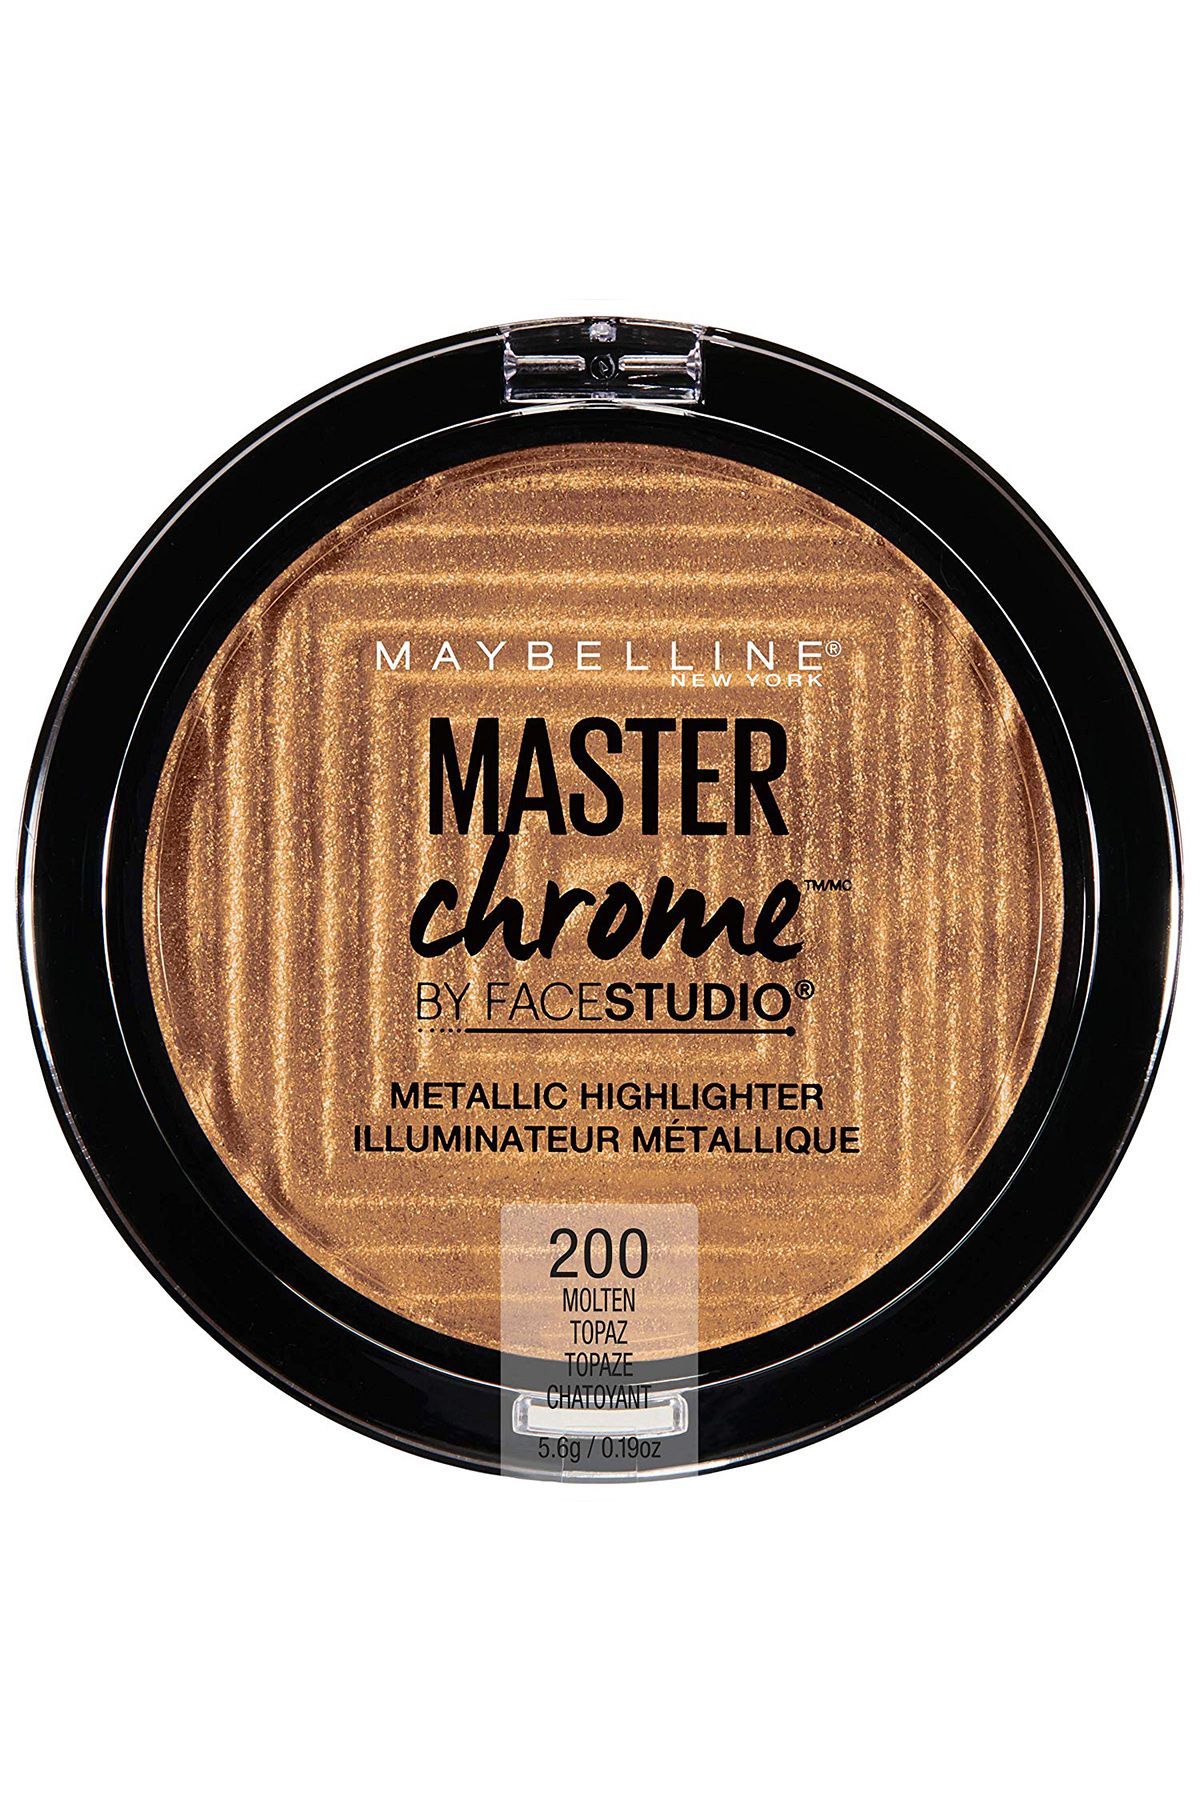 Facestudio Master Chrome Metallic Highlighter Makeup